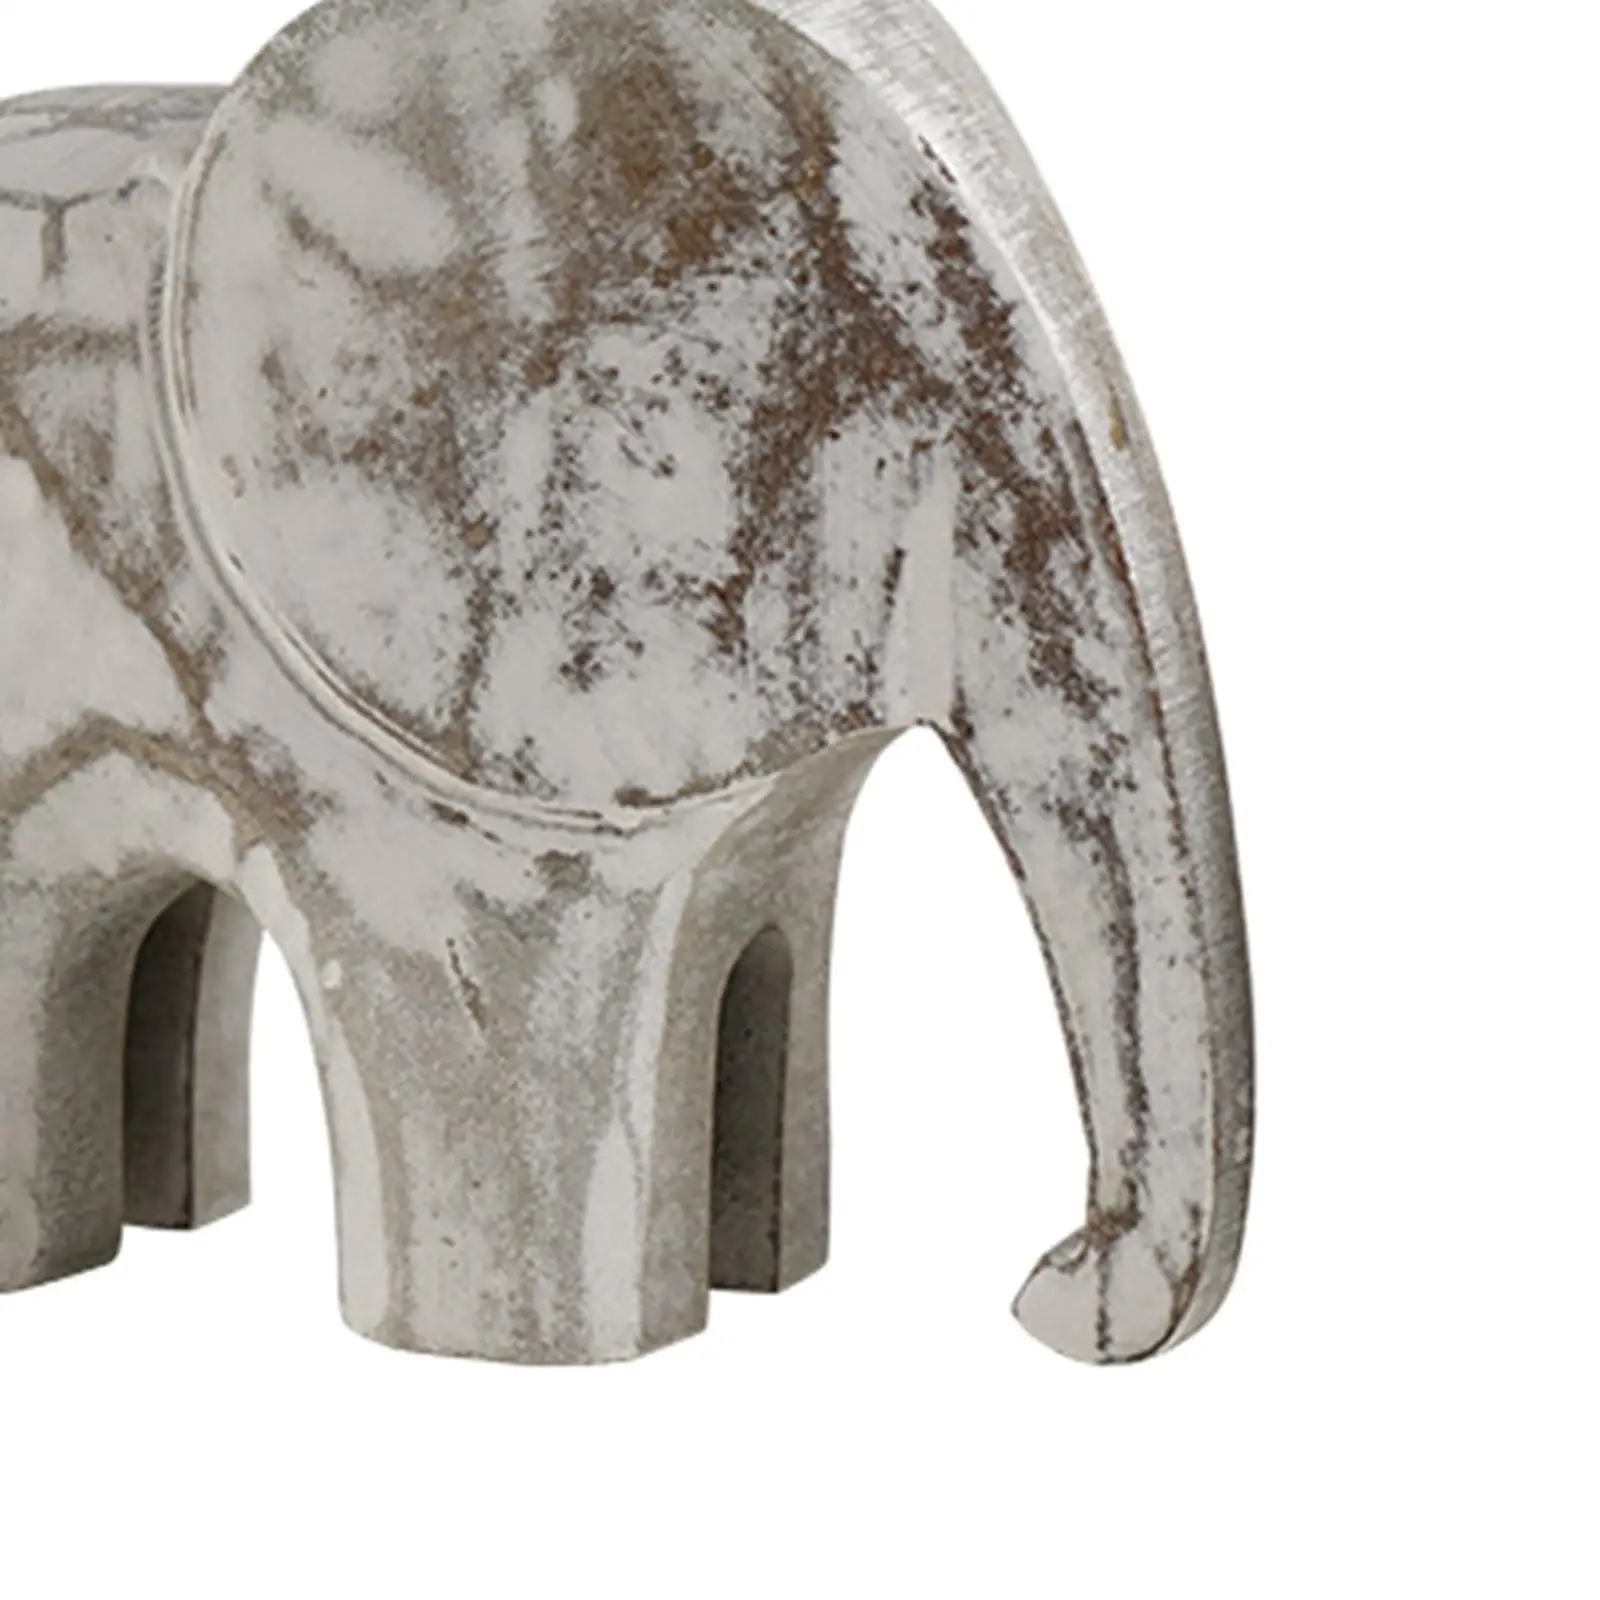 Modern Elephant Statue Sculpture Figurine 1Pair for Christmas Present Decoration